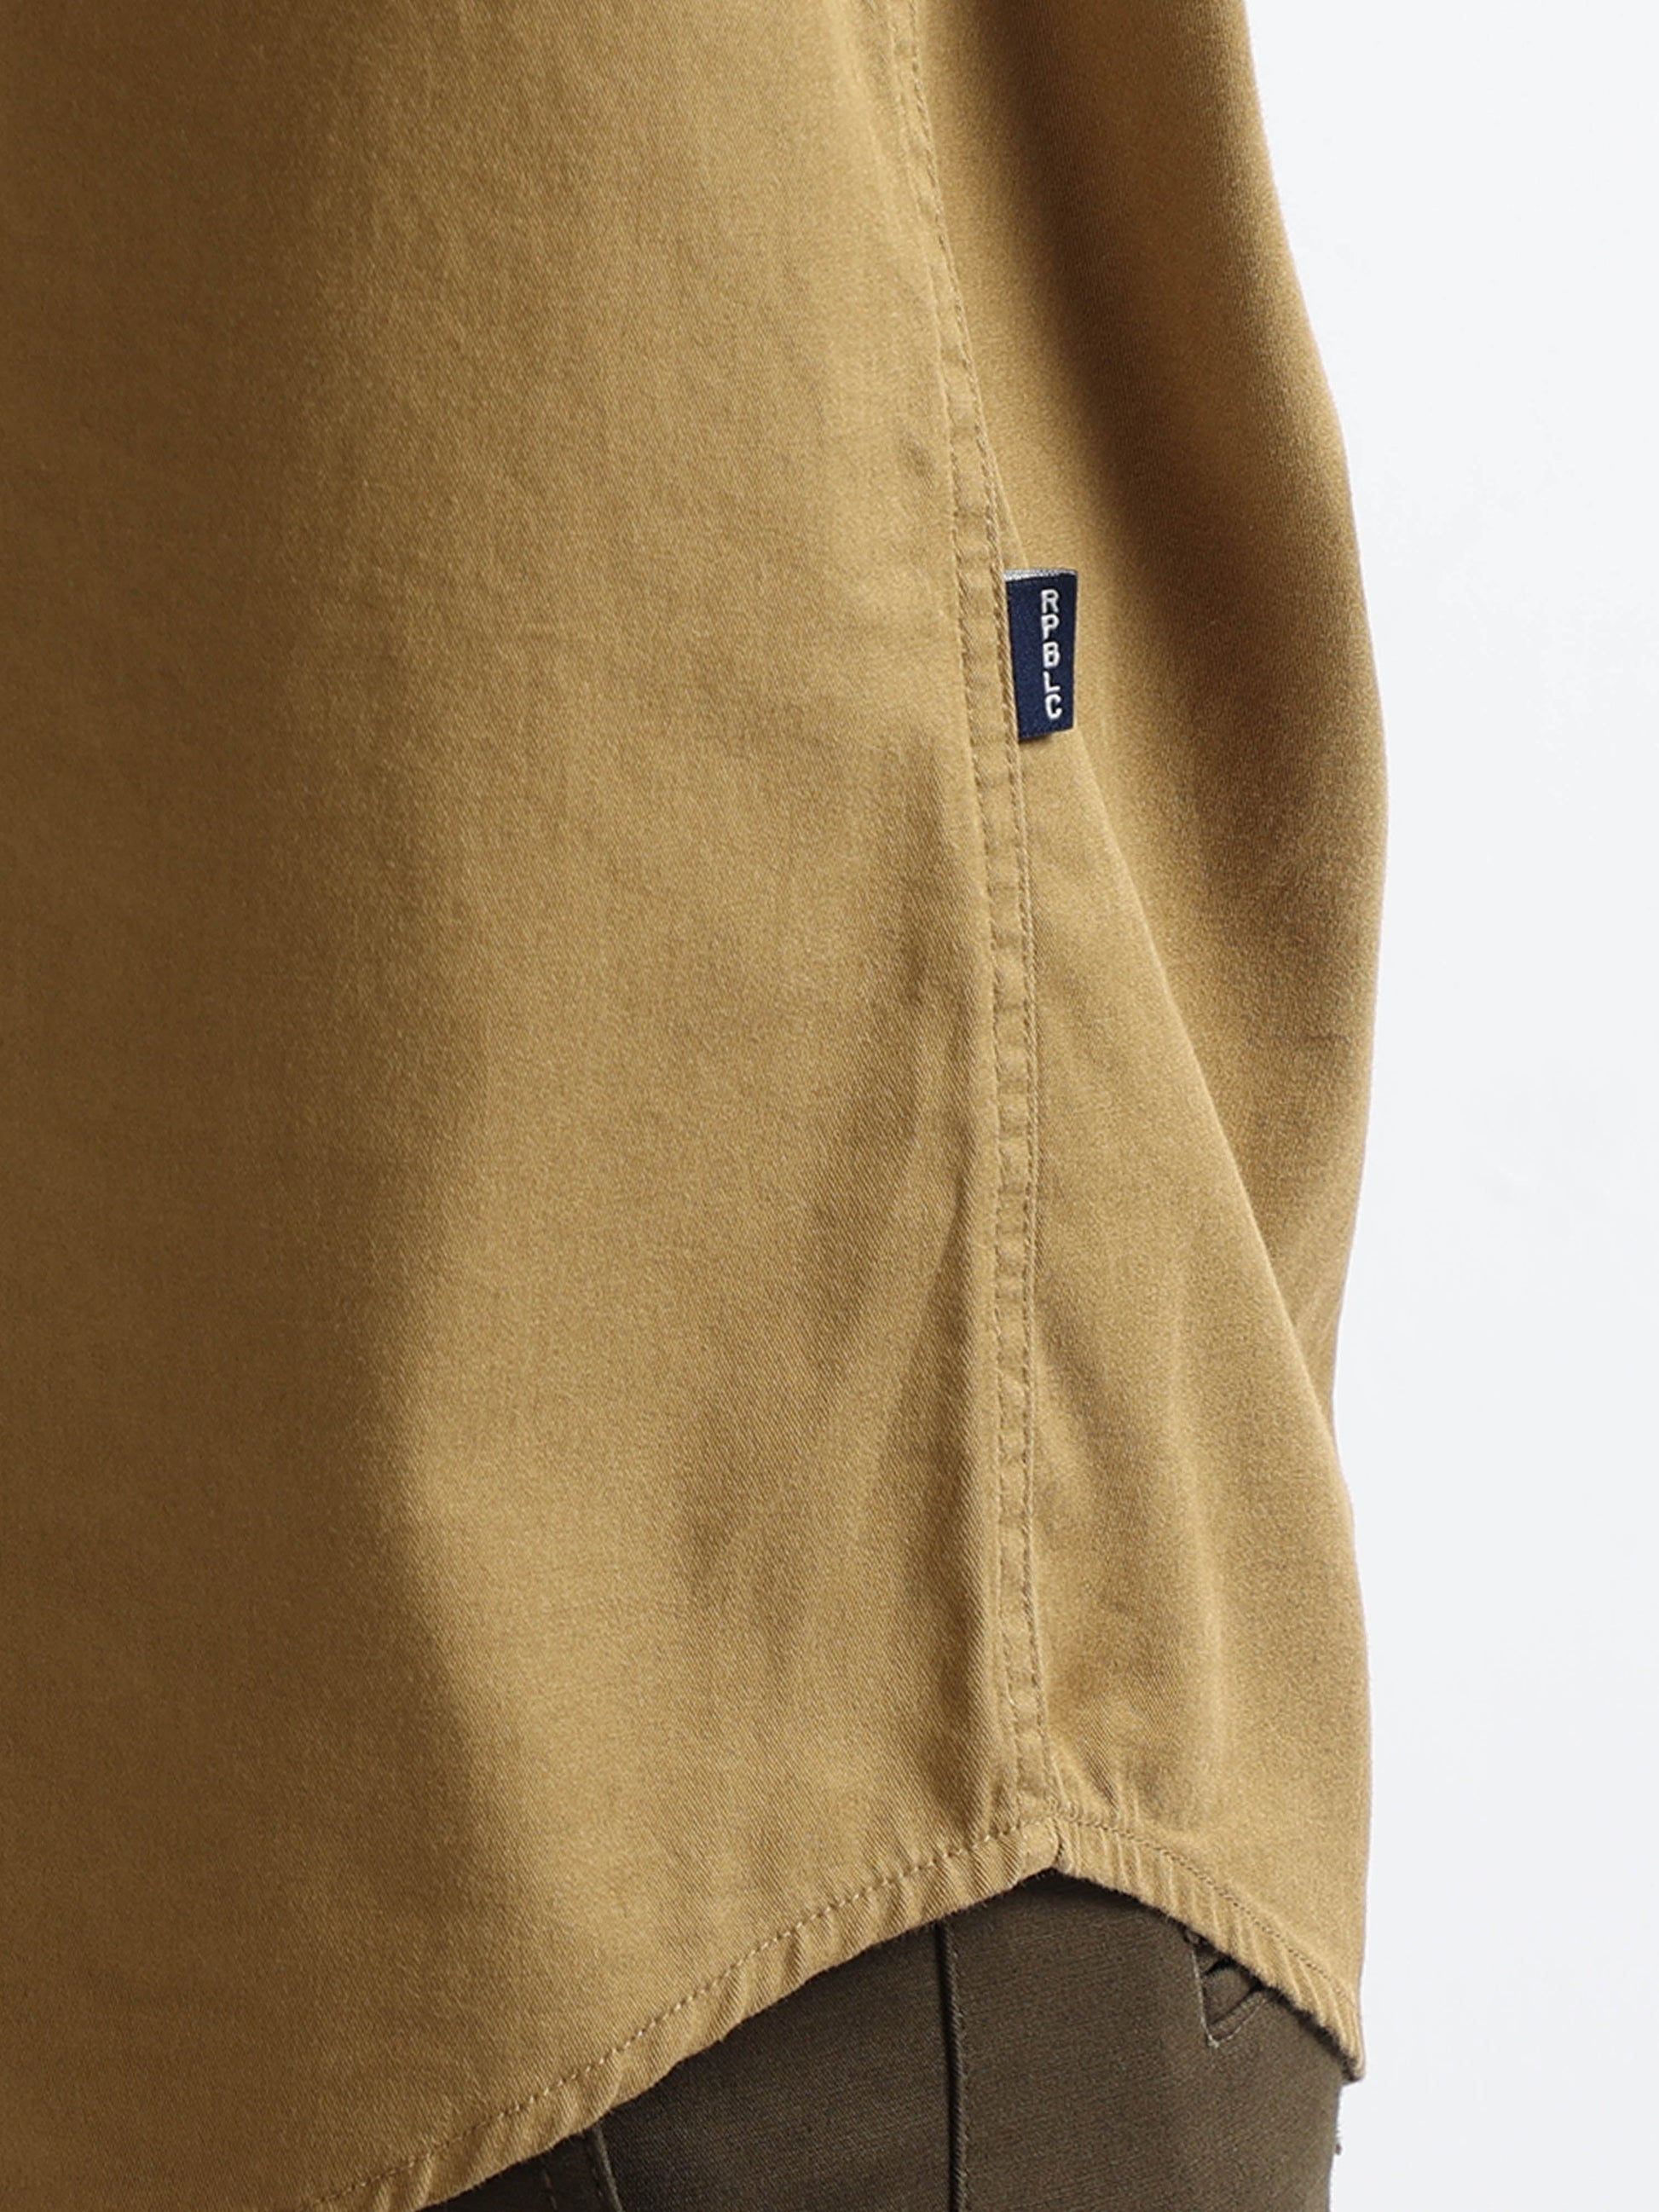 Buy Hidden Placket Stylish Single Pocket Mens Shirt Online.